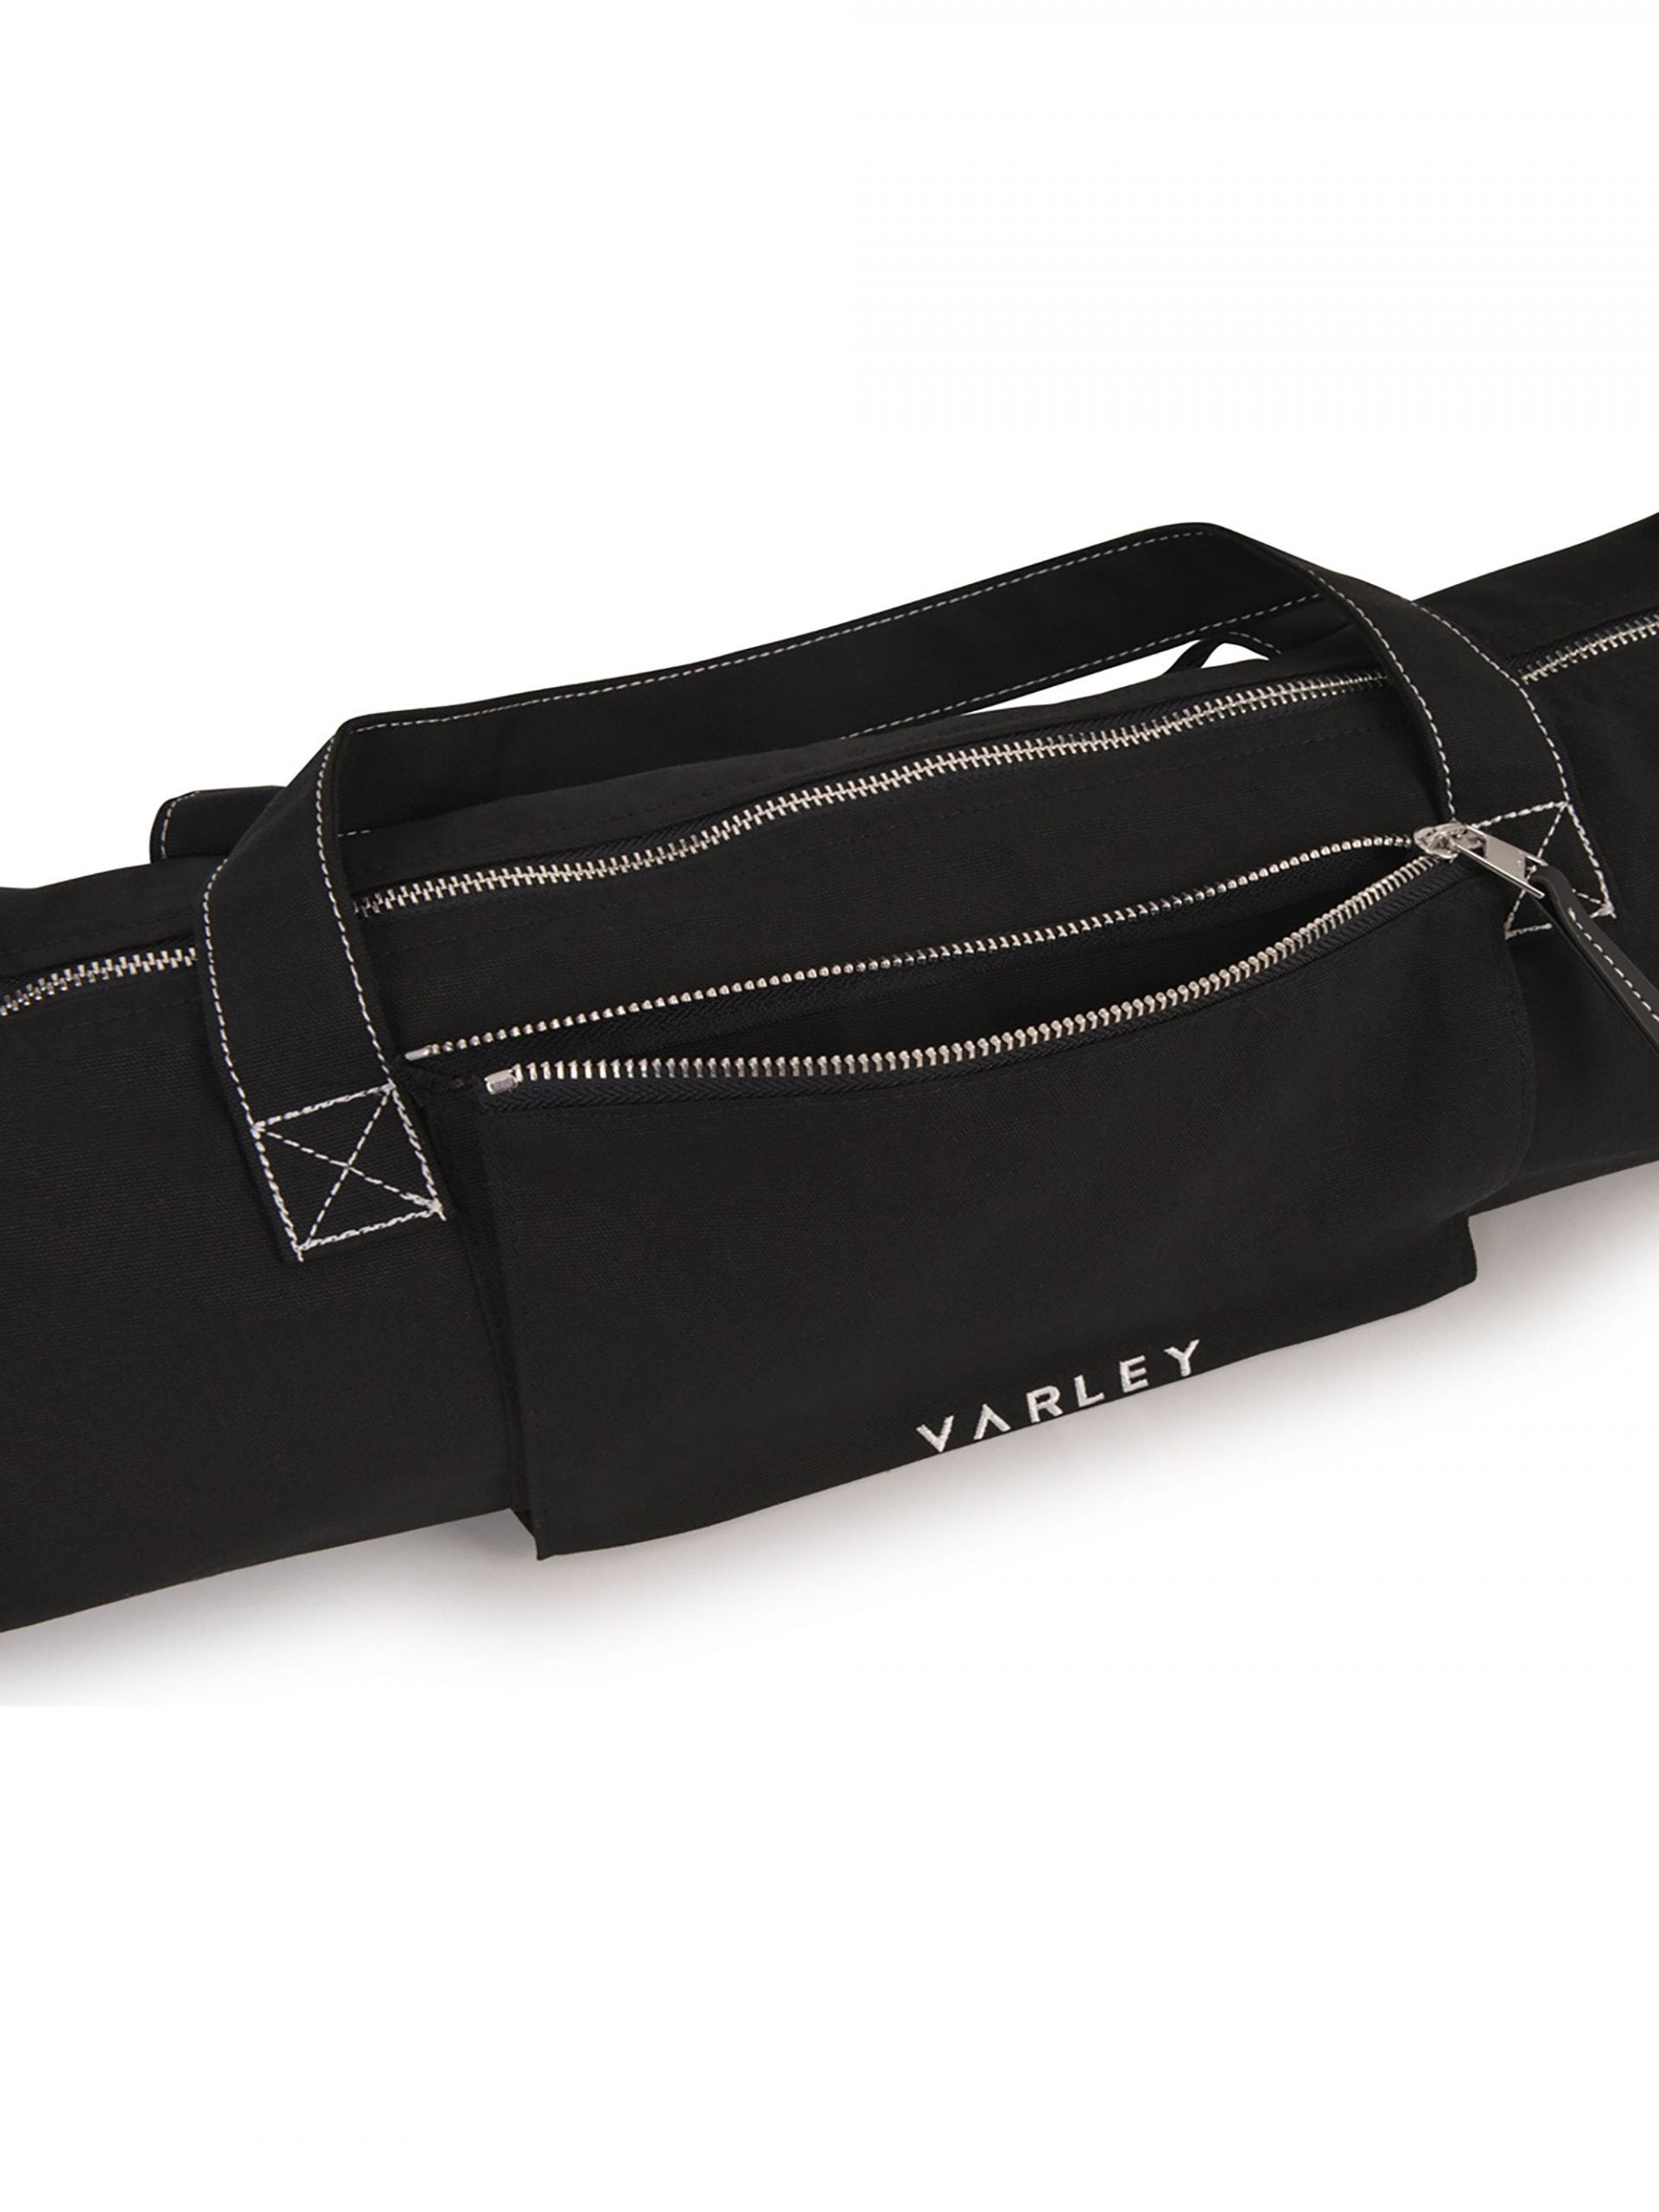 Toler Yoga Mat Bag – Fashercise